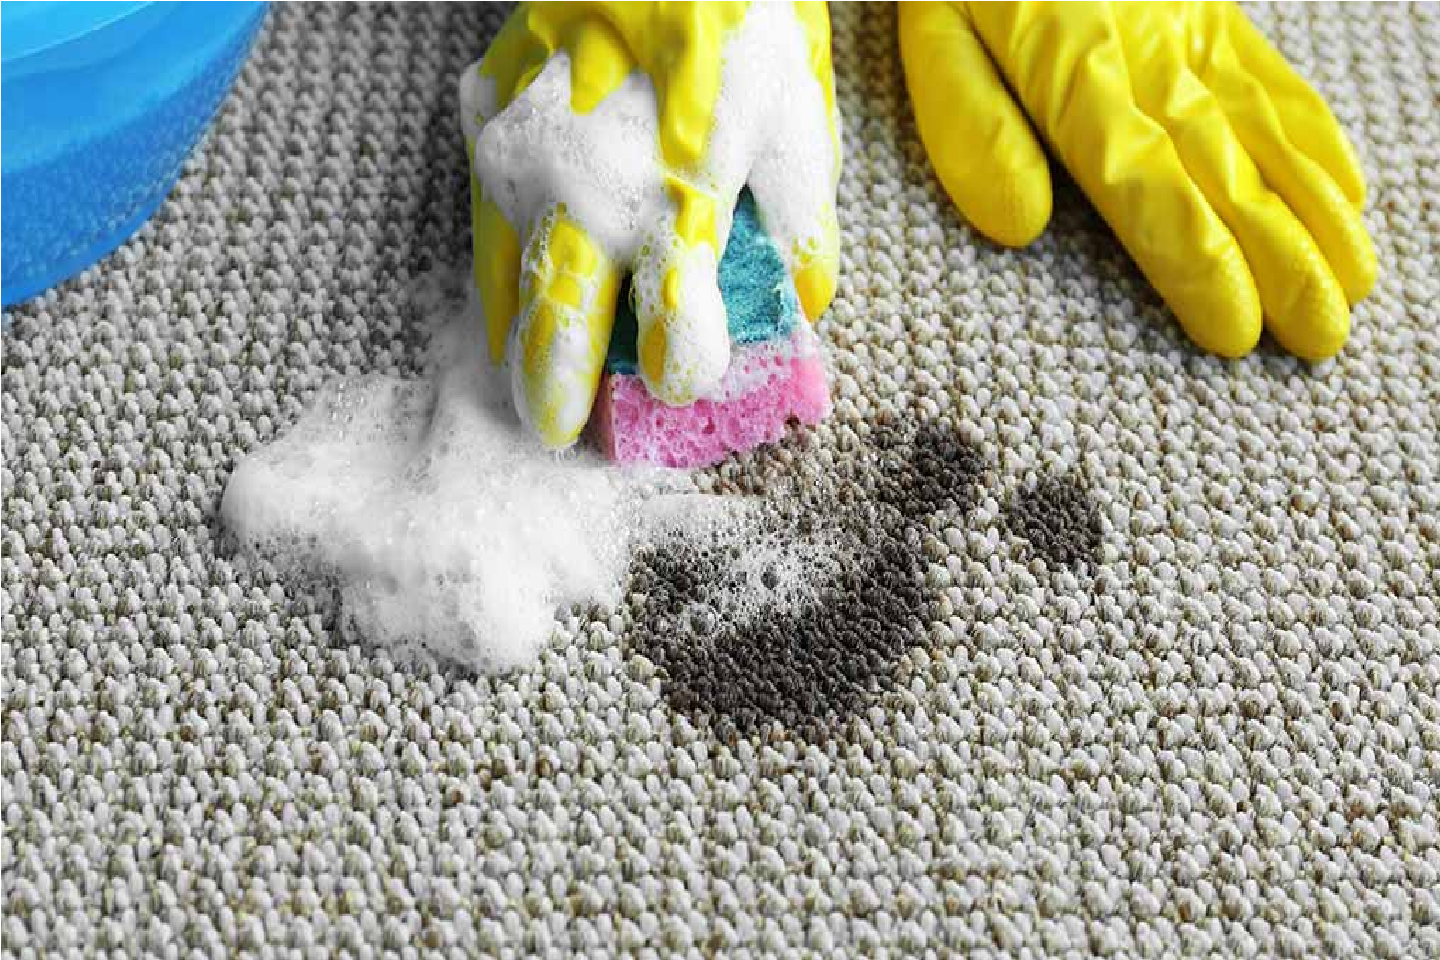  carpet shoe polish stains